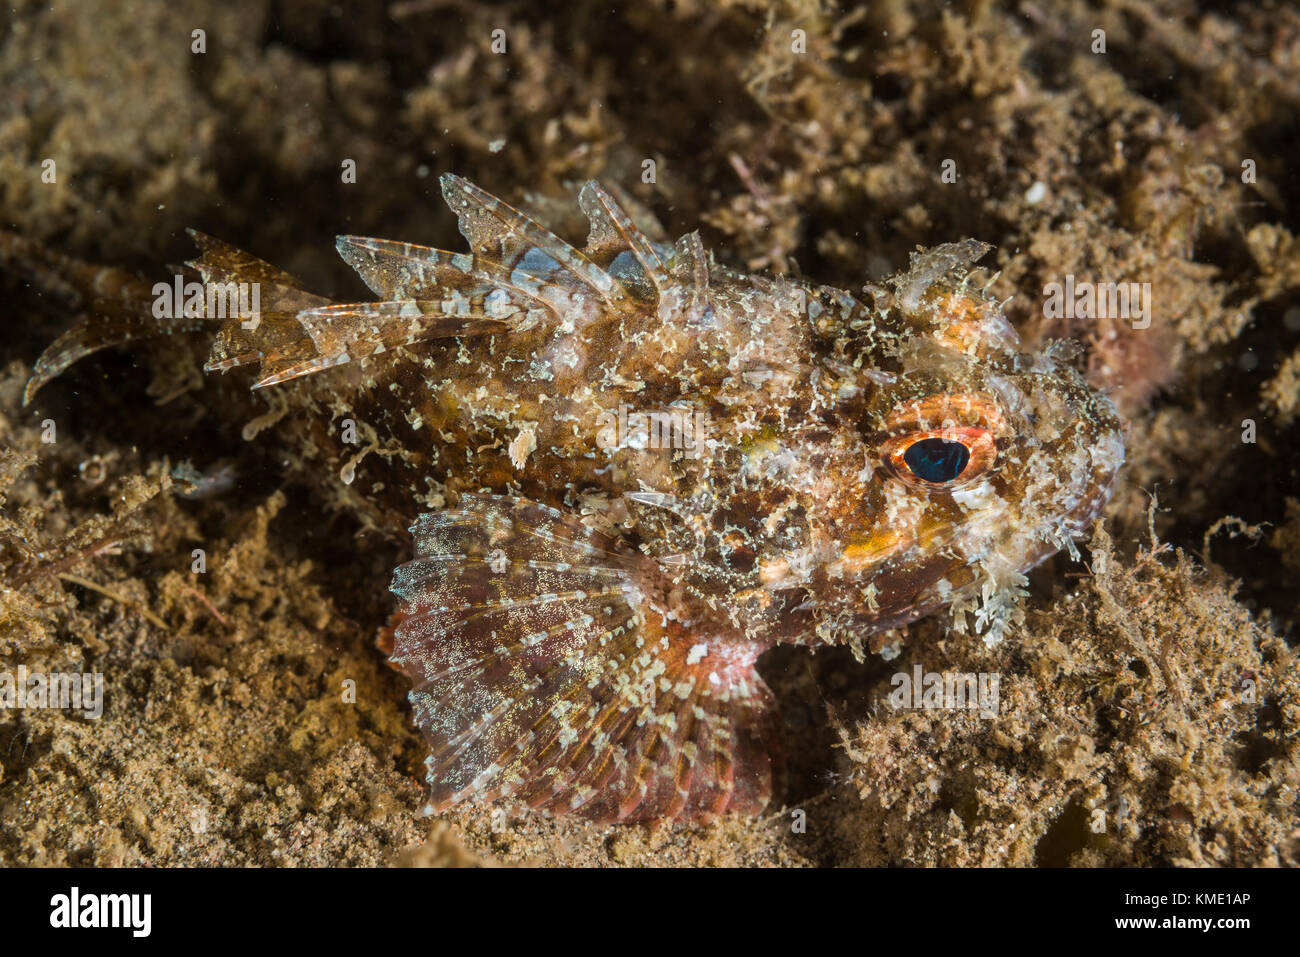 Mozambique scorpionfish hiding in plain sight Stock Photo